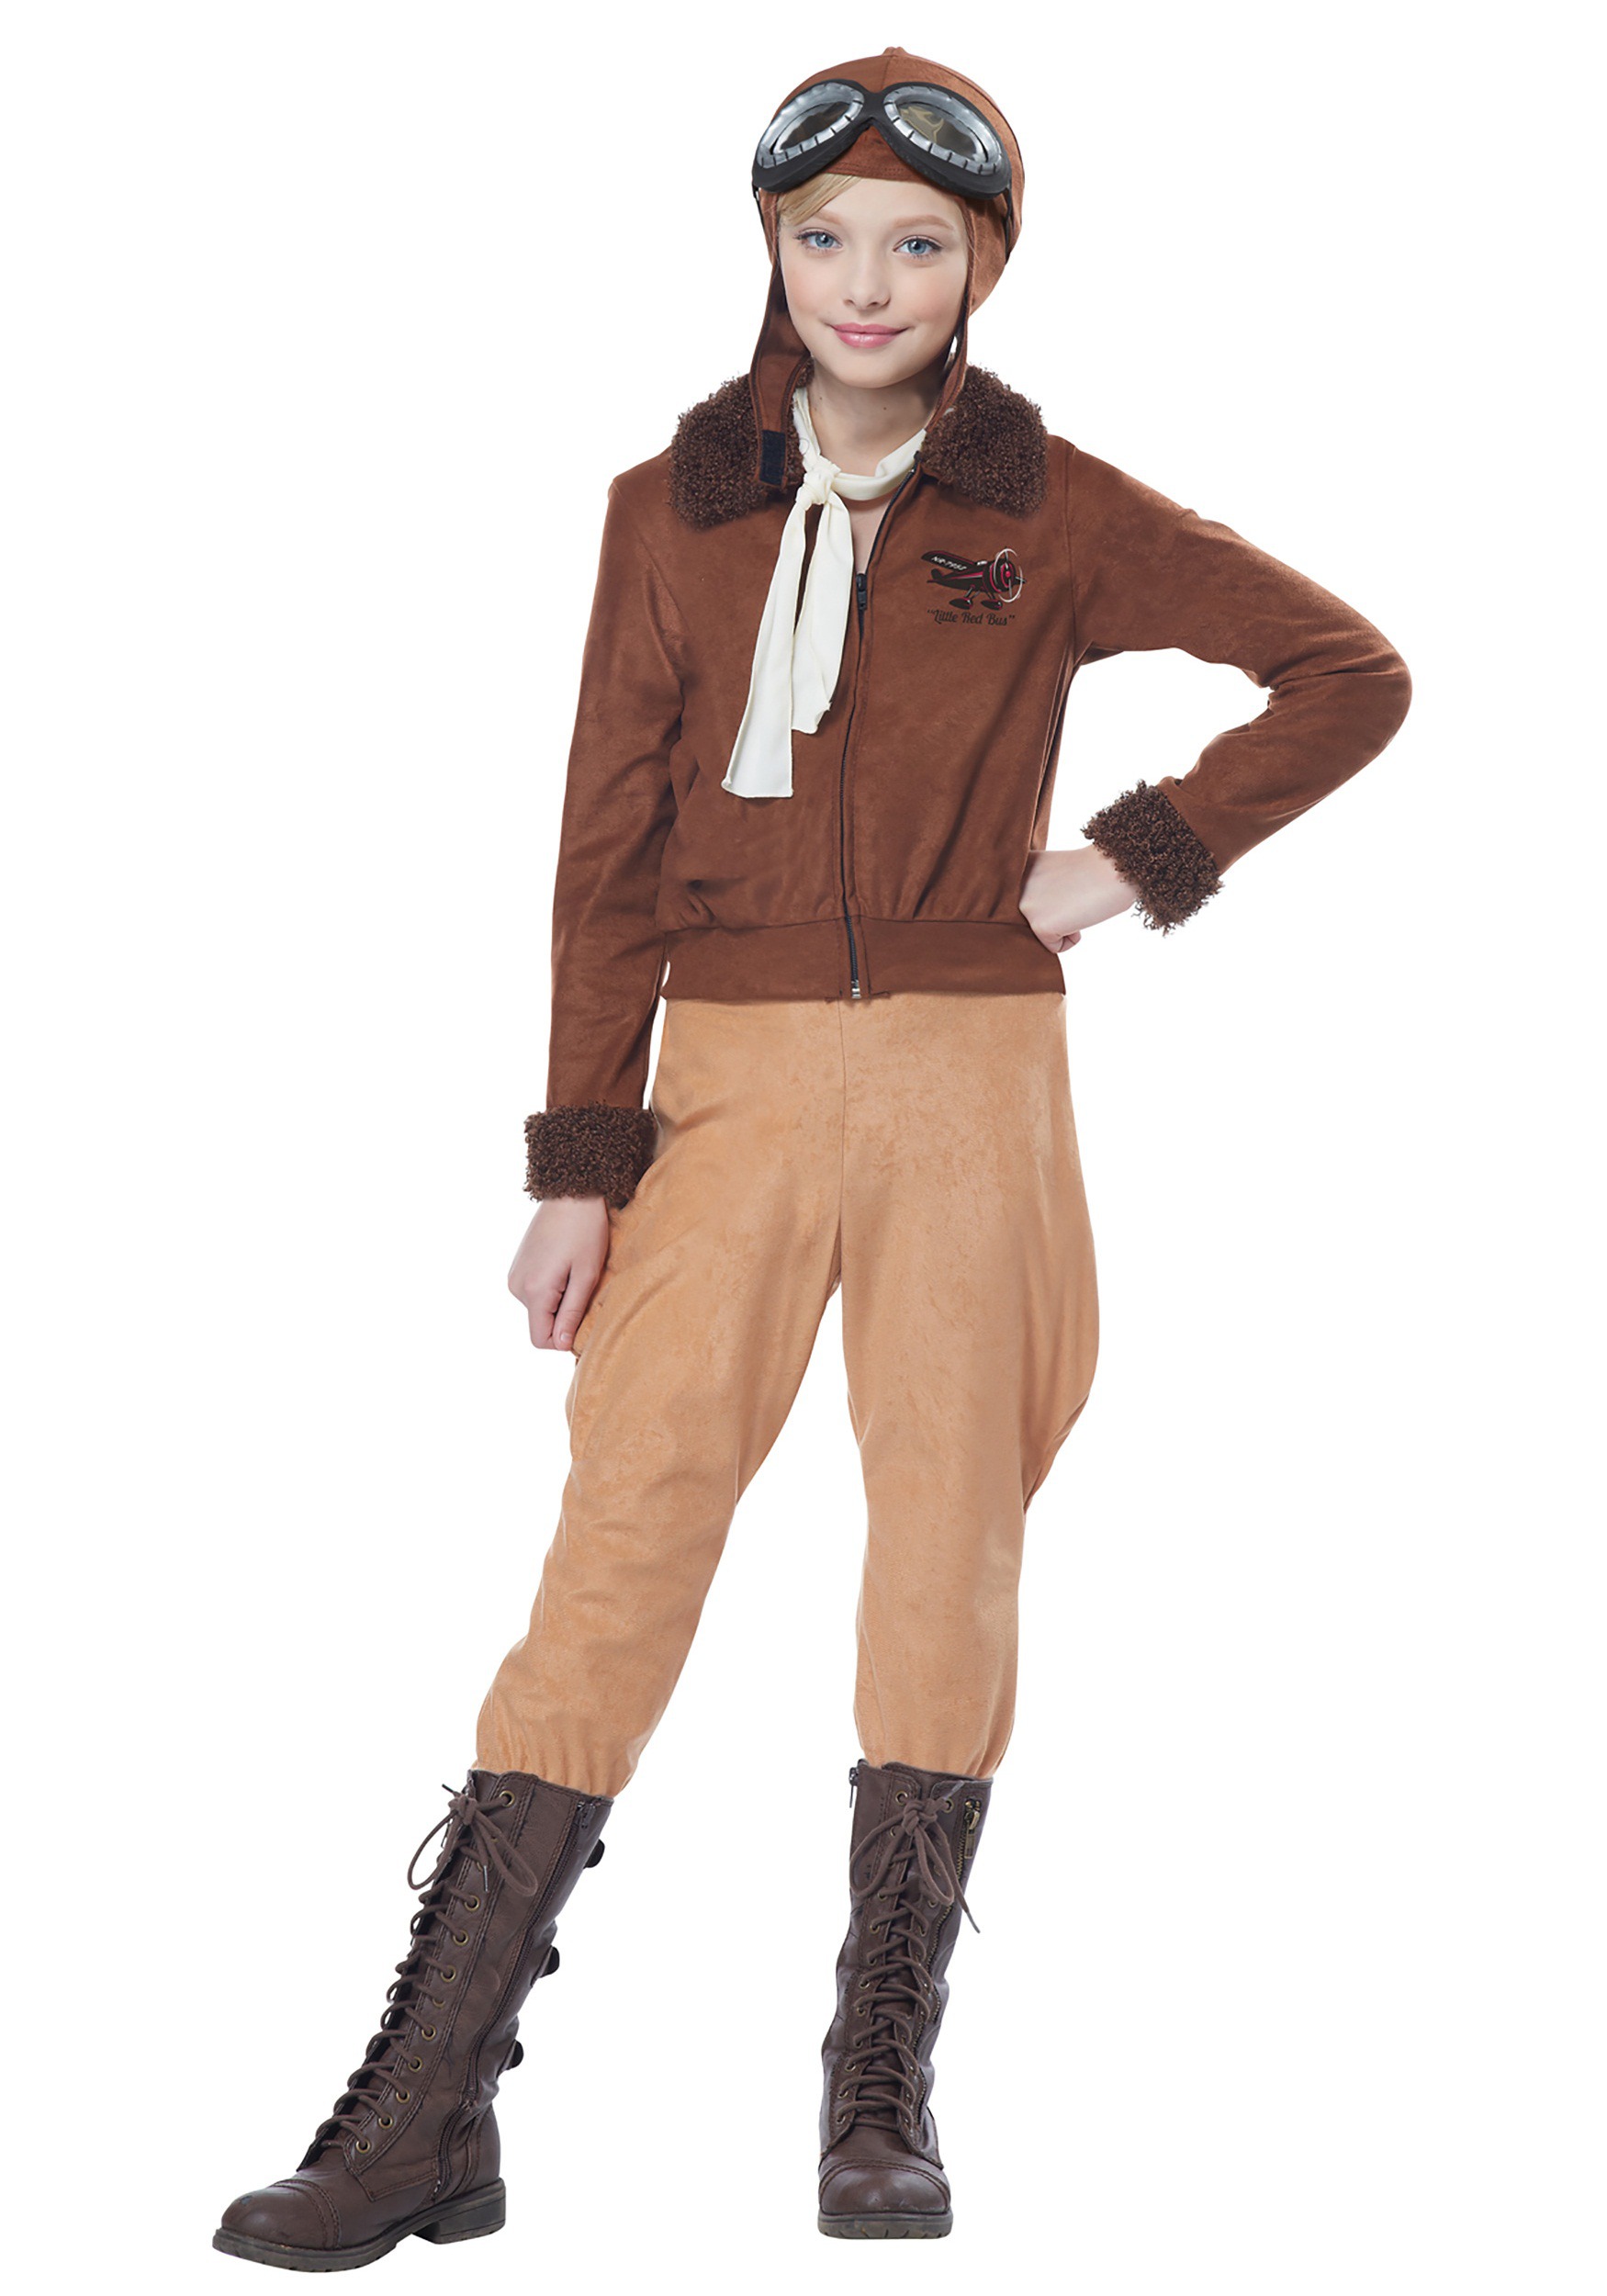 Child Amelia Earhart/Aviator Costume , Historical Costume